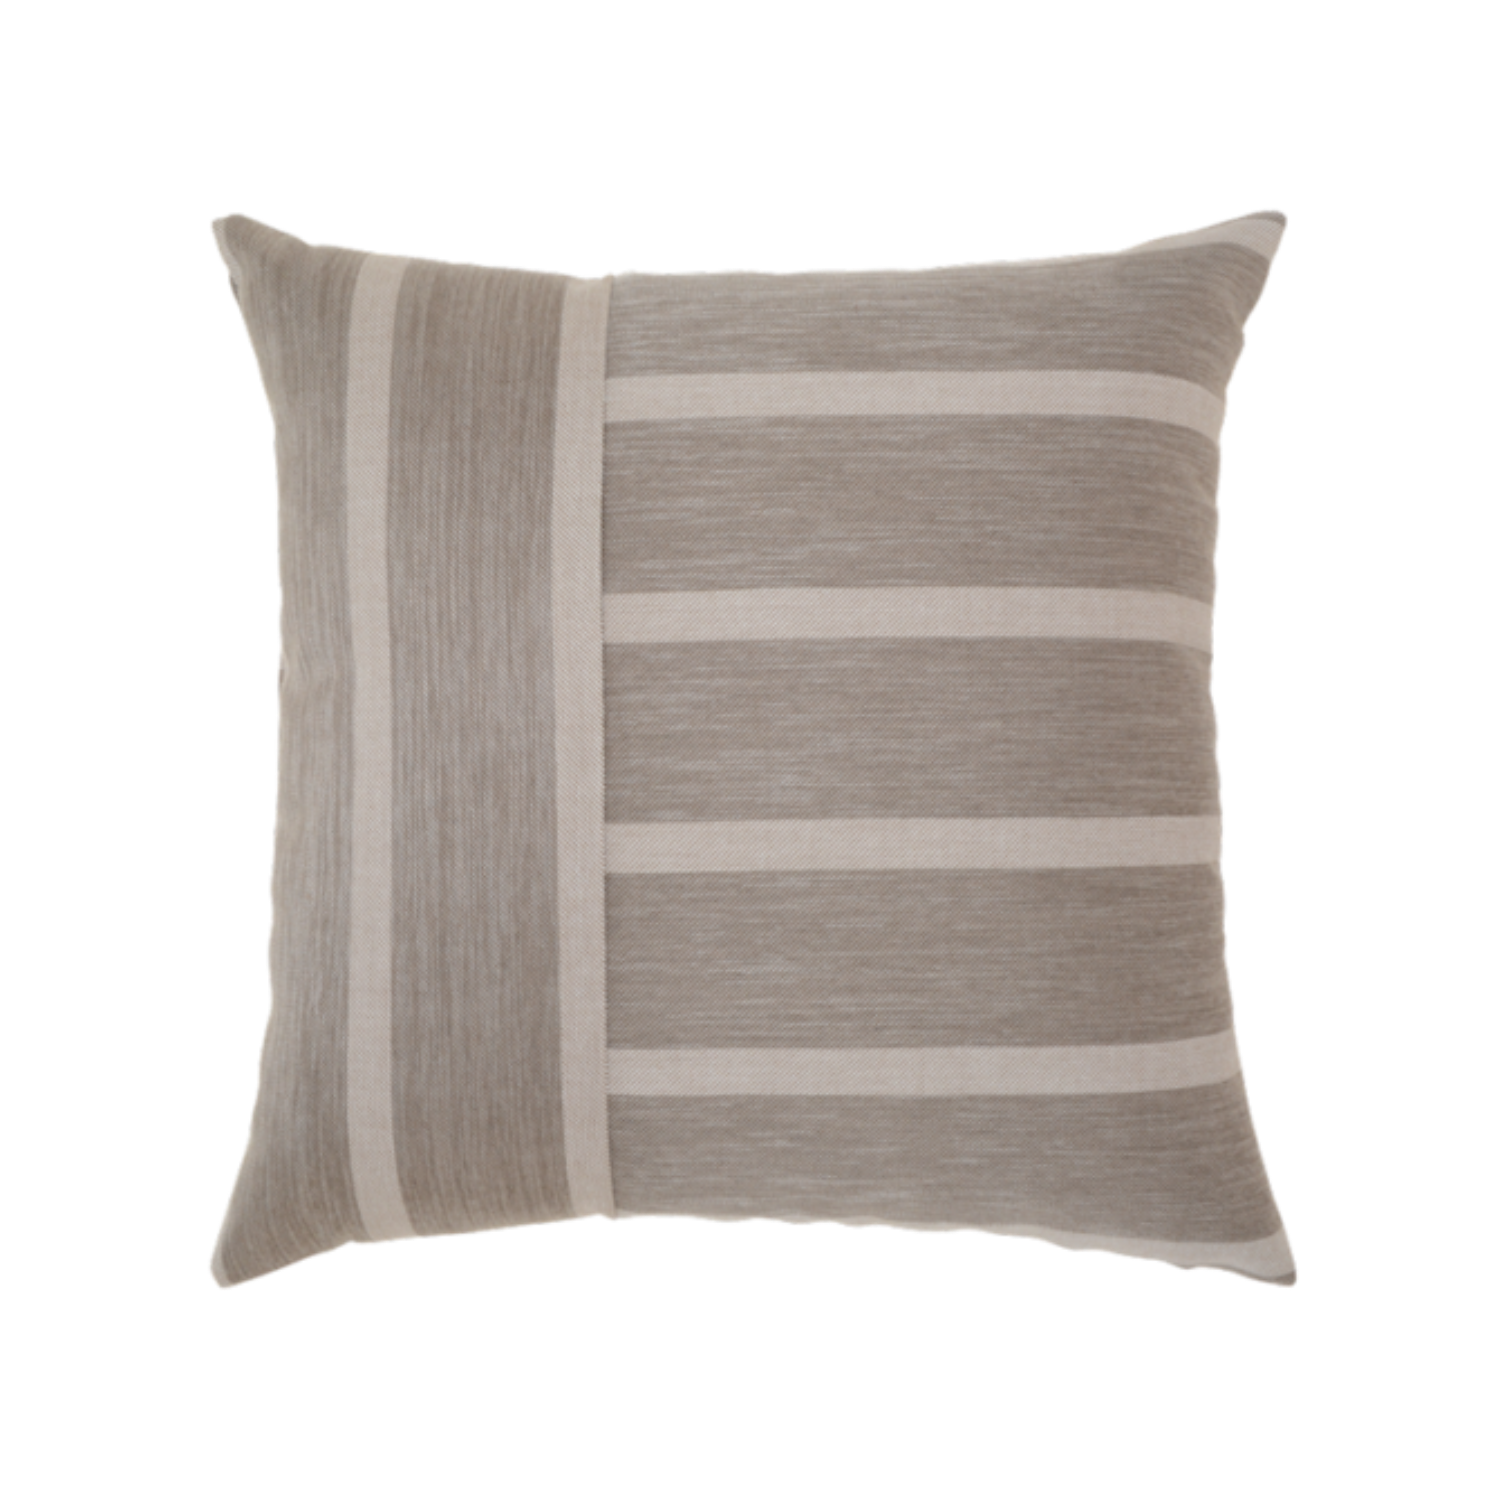 Elaine Smith 20 inch Square Outdoor Pillow - Sparkle Stripe - Polyester Fiber Fill Throw Pillows 12031015